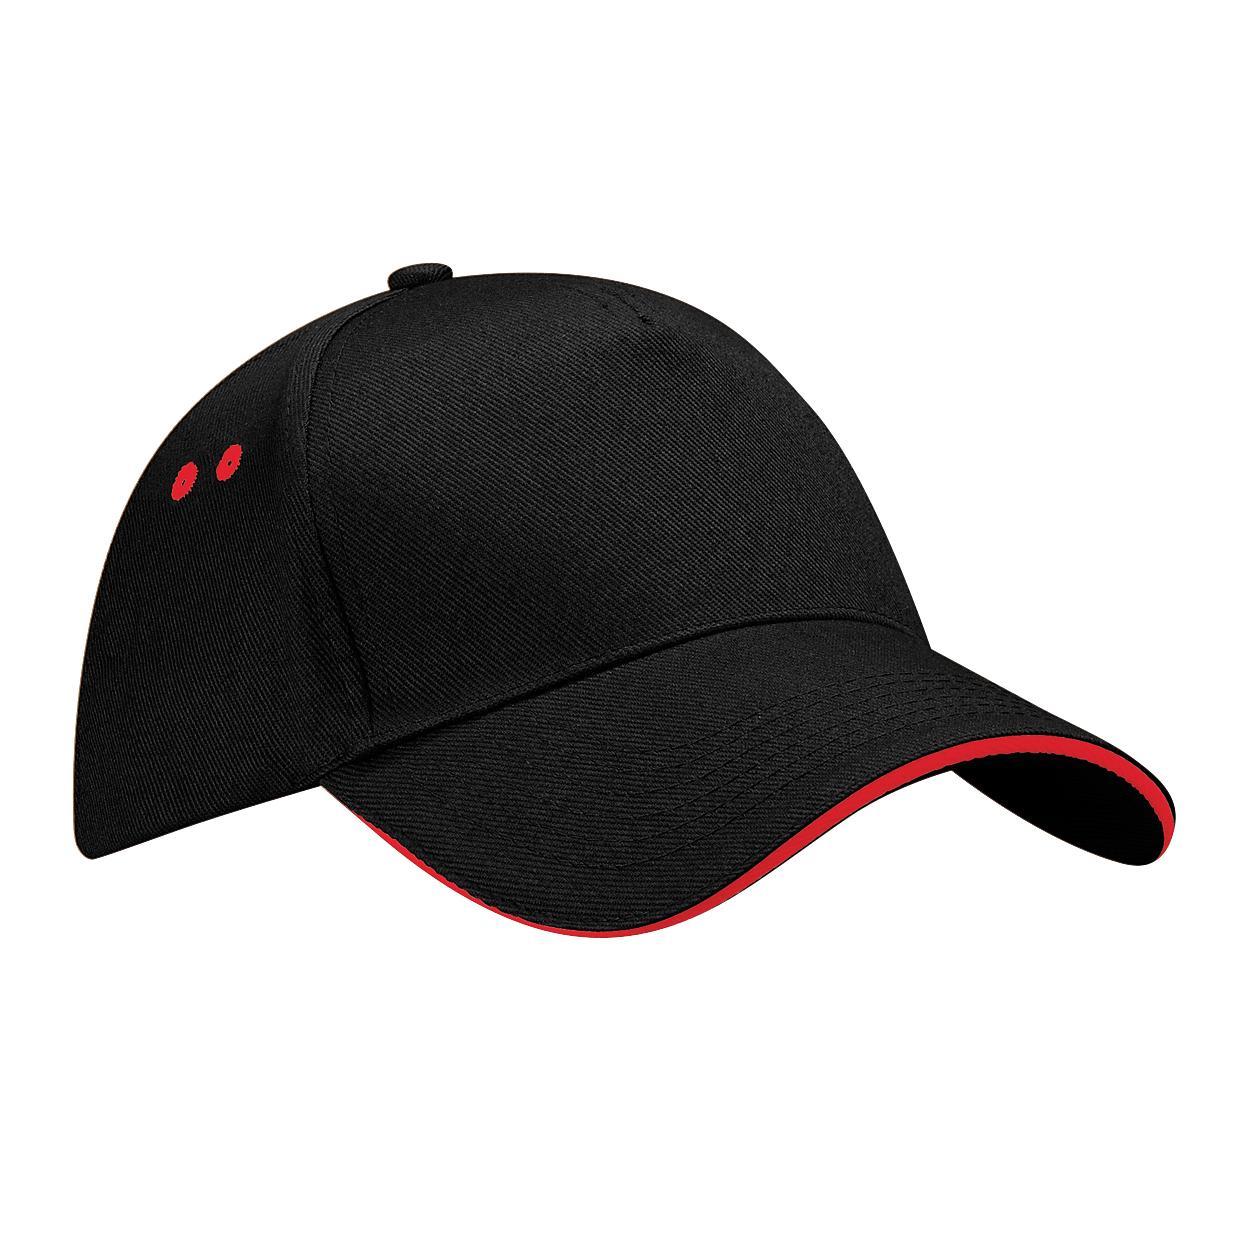 Beechfield Unisex Ultimate 5 Panel Contrast Baseball Cap With Sandwich Peak / Headwear (Black/Classic Red) (One Size)